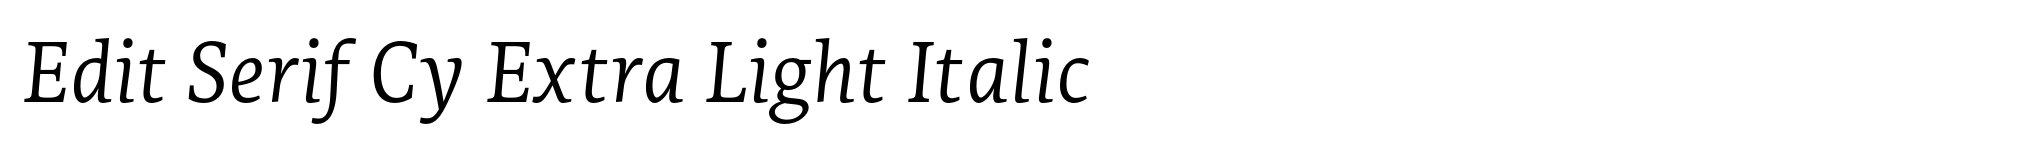 Edit Serif Cy Extra Light Italic image